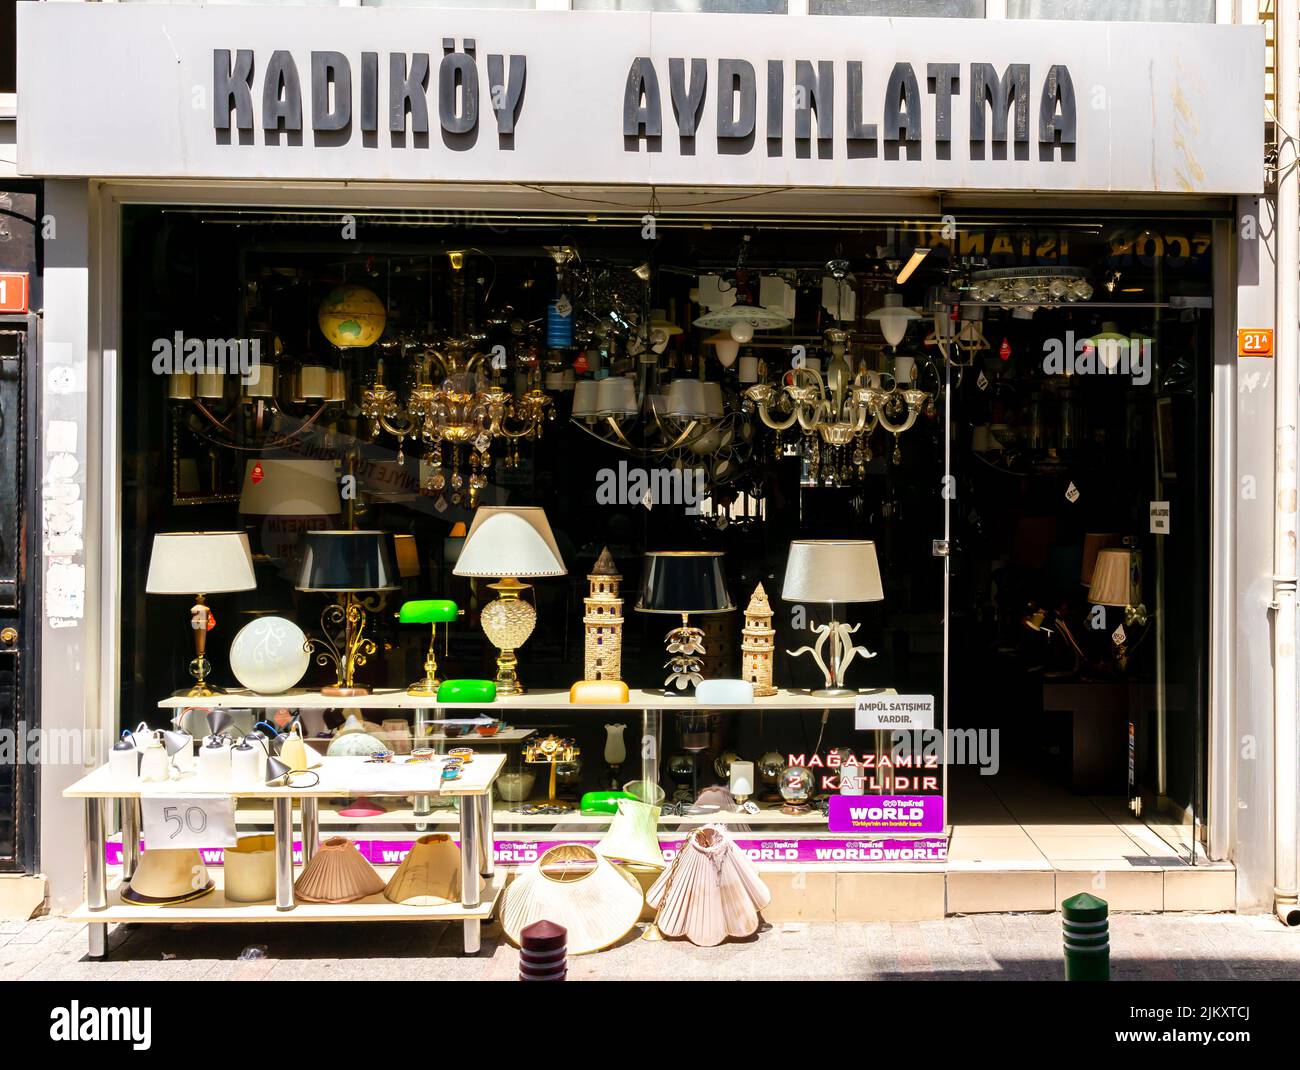 Kadikoy Aydinlatma - lighting fixtures store - Kadikoy, Istanbul, Turkey Stock Photo